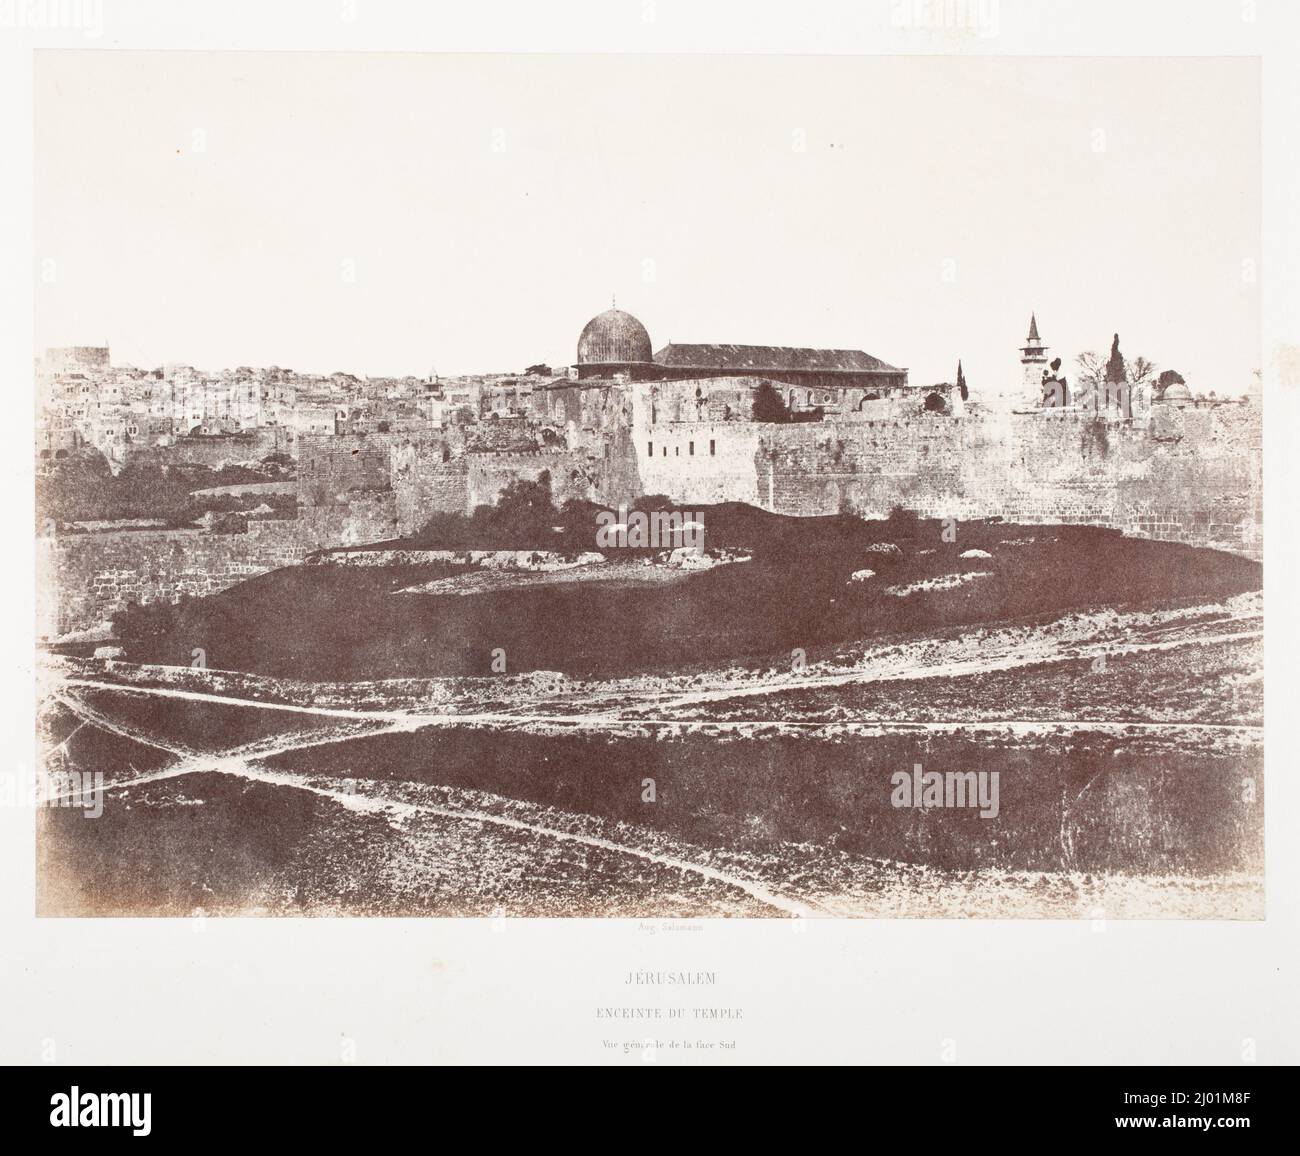 Jerusalem - Enciente Du Temple. Auguste Salzmann (France, 1824-1872). Israel, circa 1856, printed circa1856. Photographs. Salt print Stock Photo